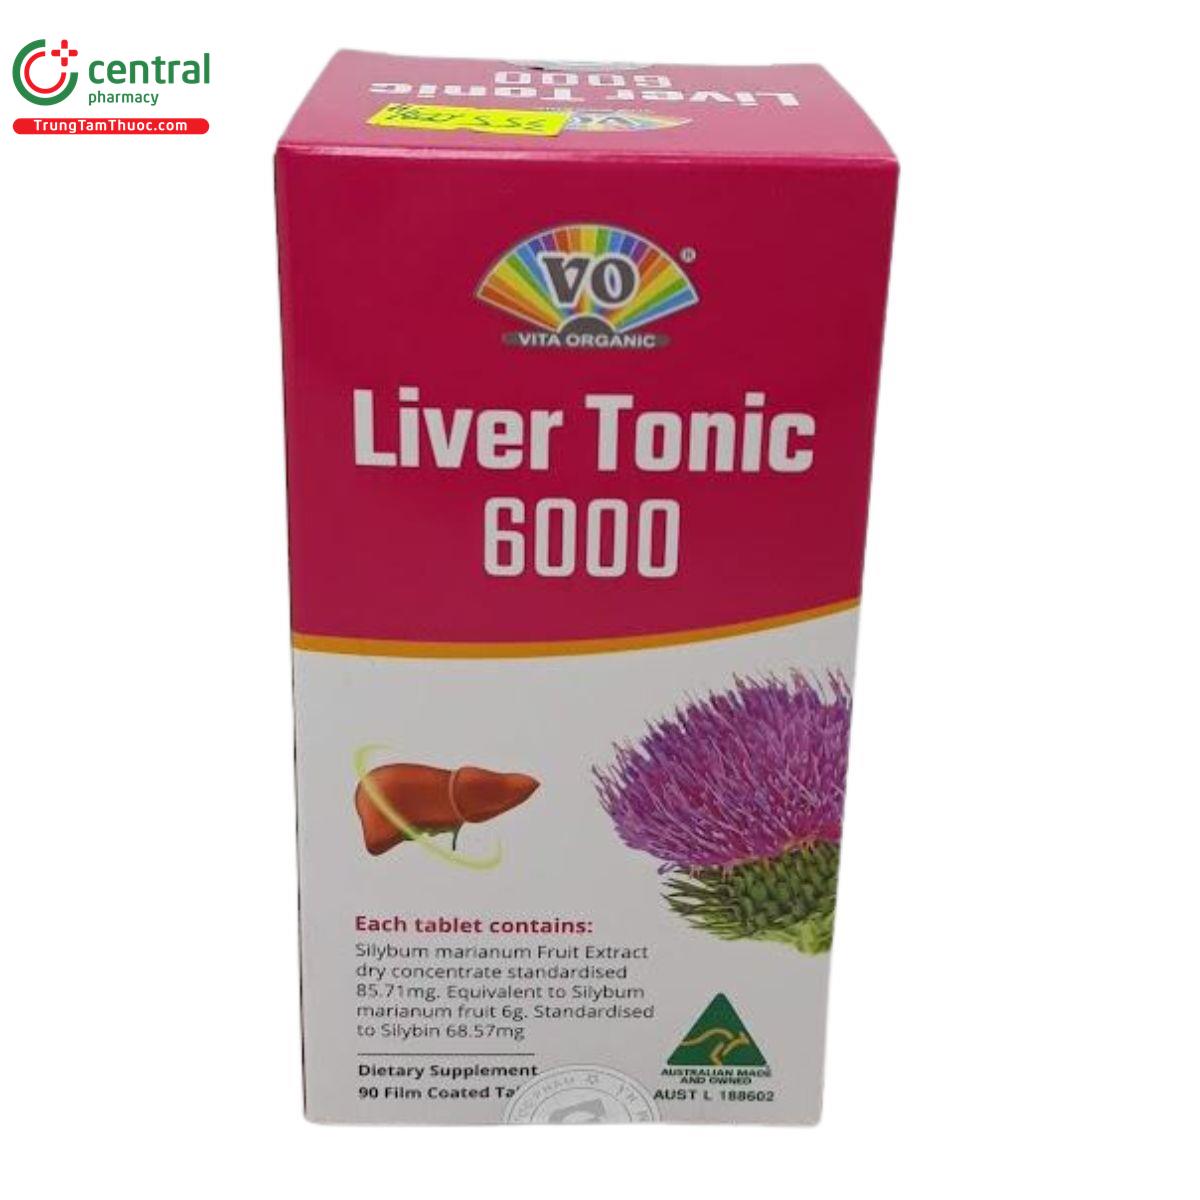 vita organic liver tonic 6000 11 K4403